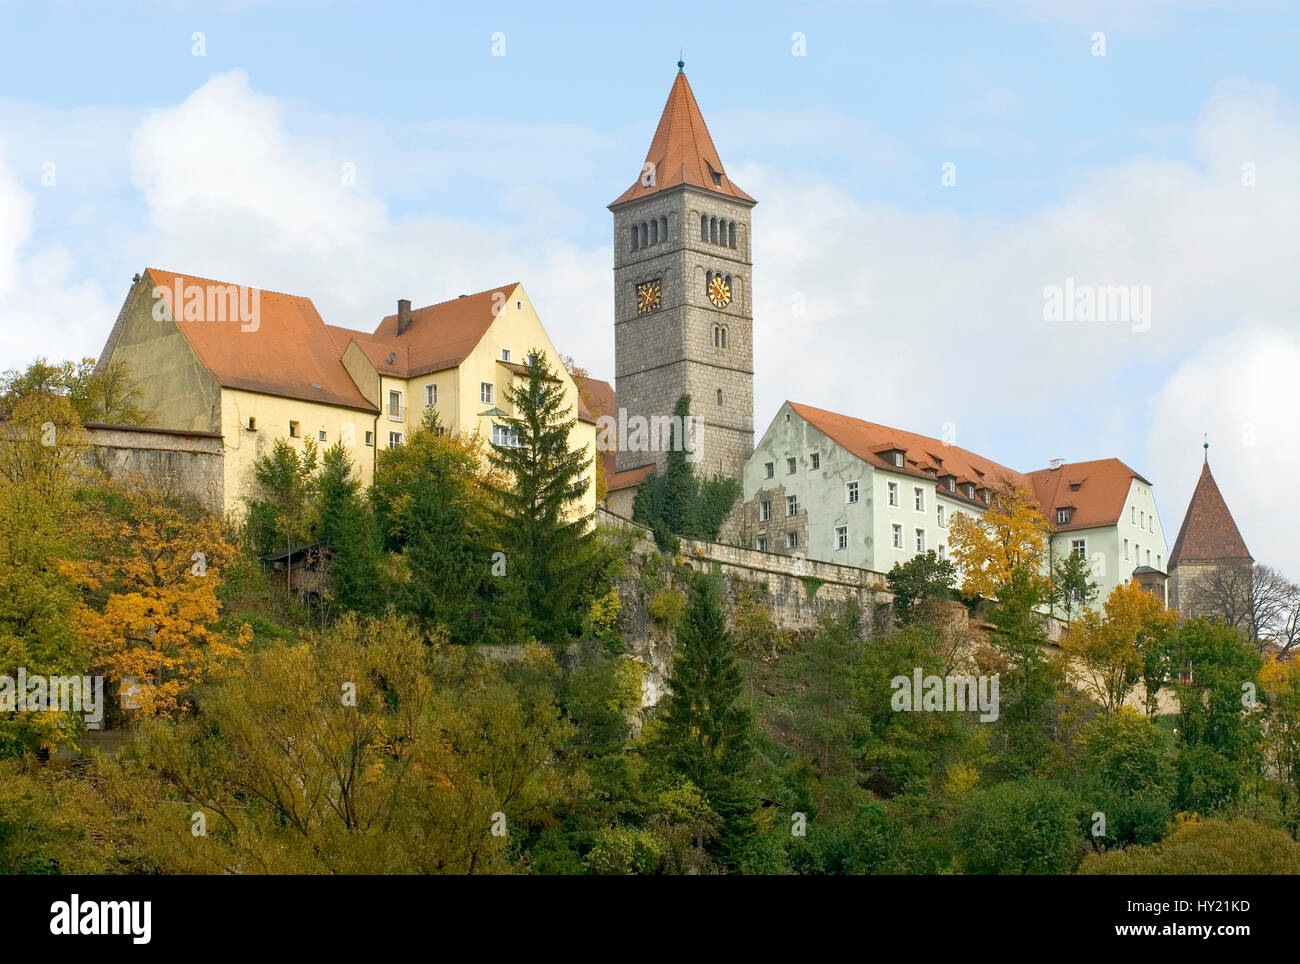 Image of the Castle Monastery in Kastl in the German state of Bavaria.   Blick auf das Klosterschloss Kastl in Bayern, Deutschland. Stock Photo